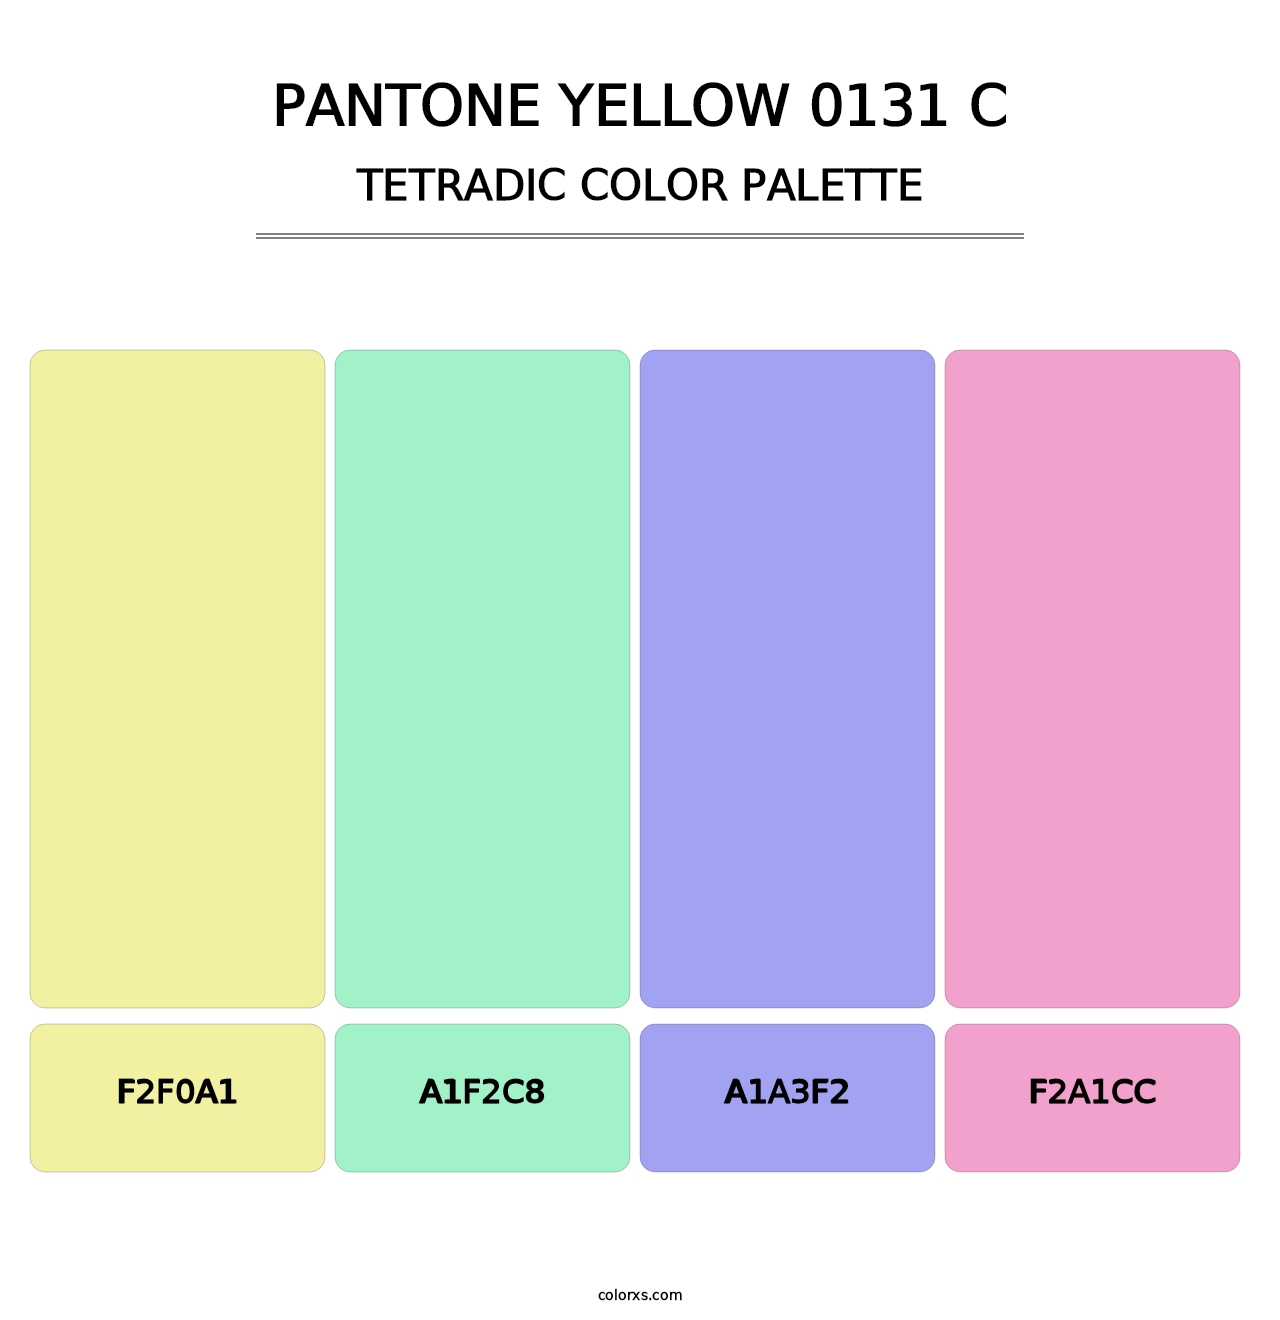 PANTONE Yellow 0131 C - Tetradic Color Palette